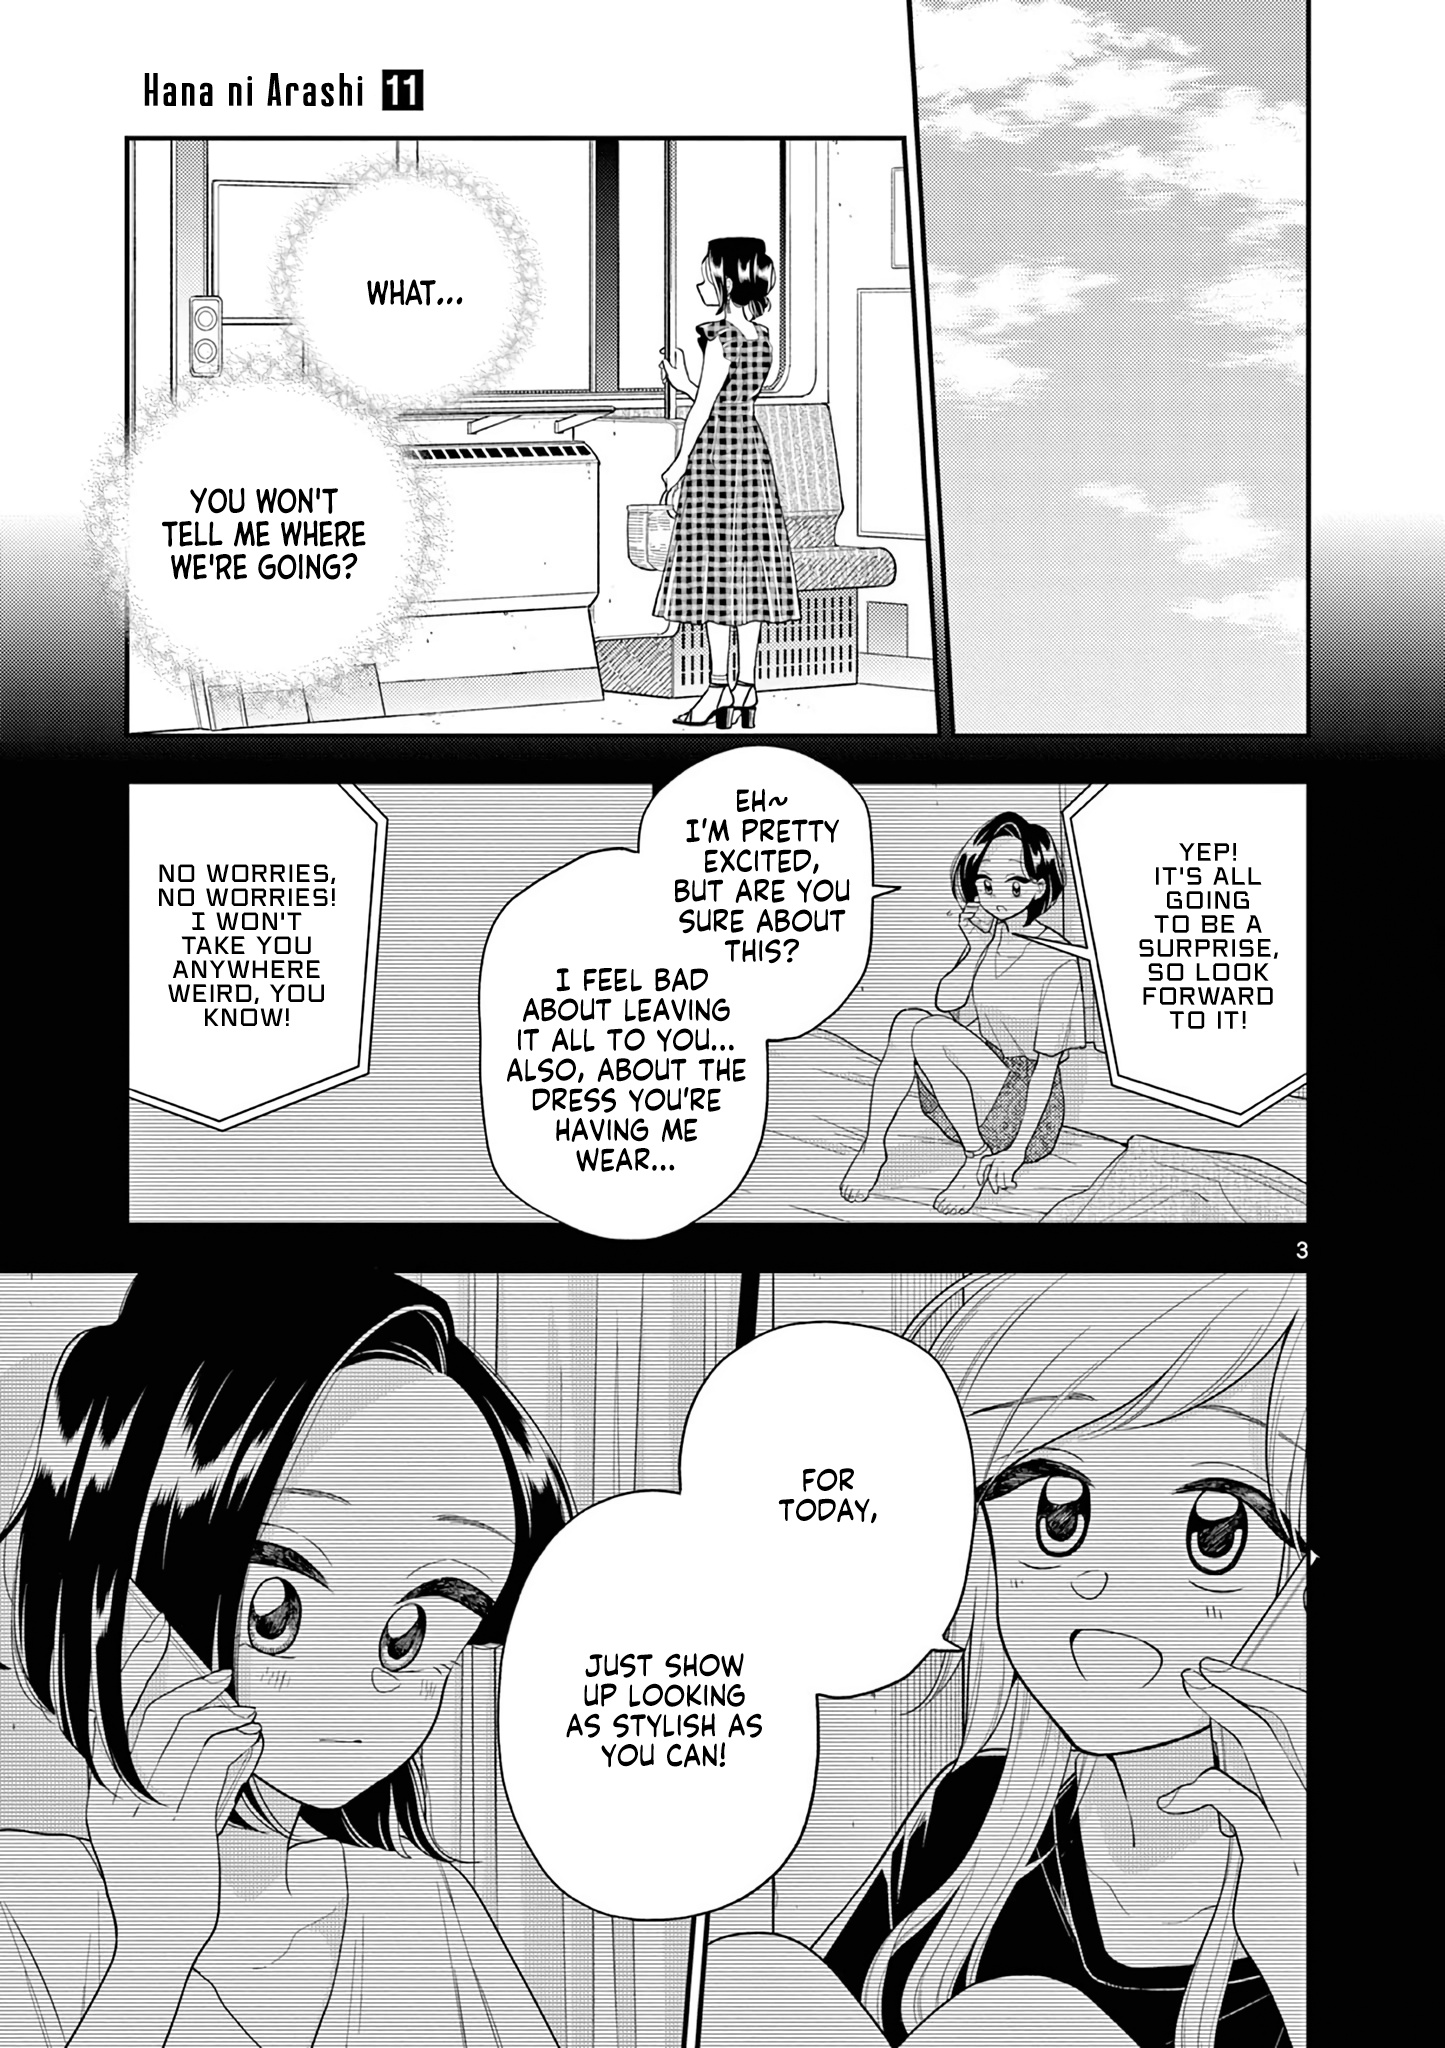 Hana Ni Arashi Vol.11 Chapter 127: The Daily Life Of A Princess — Part 1 - Picture 3